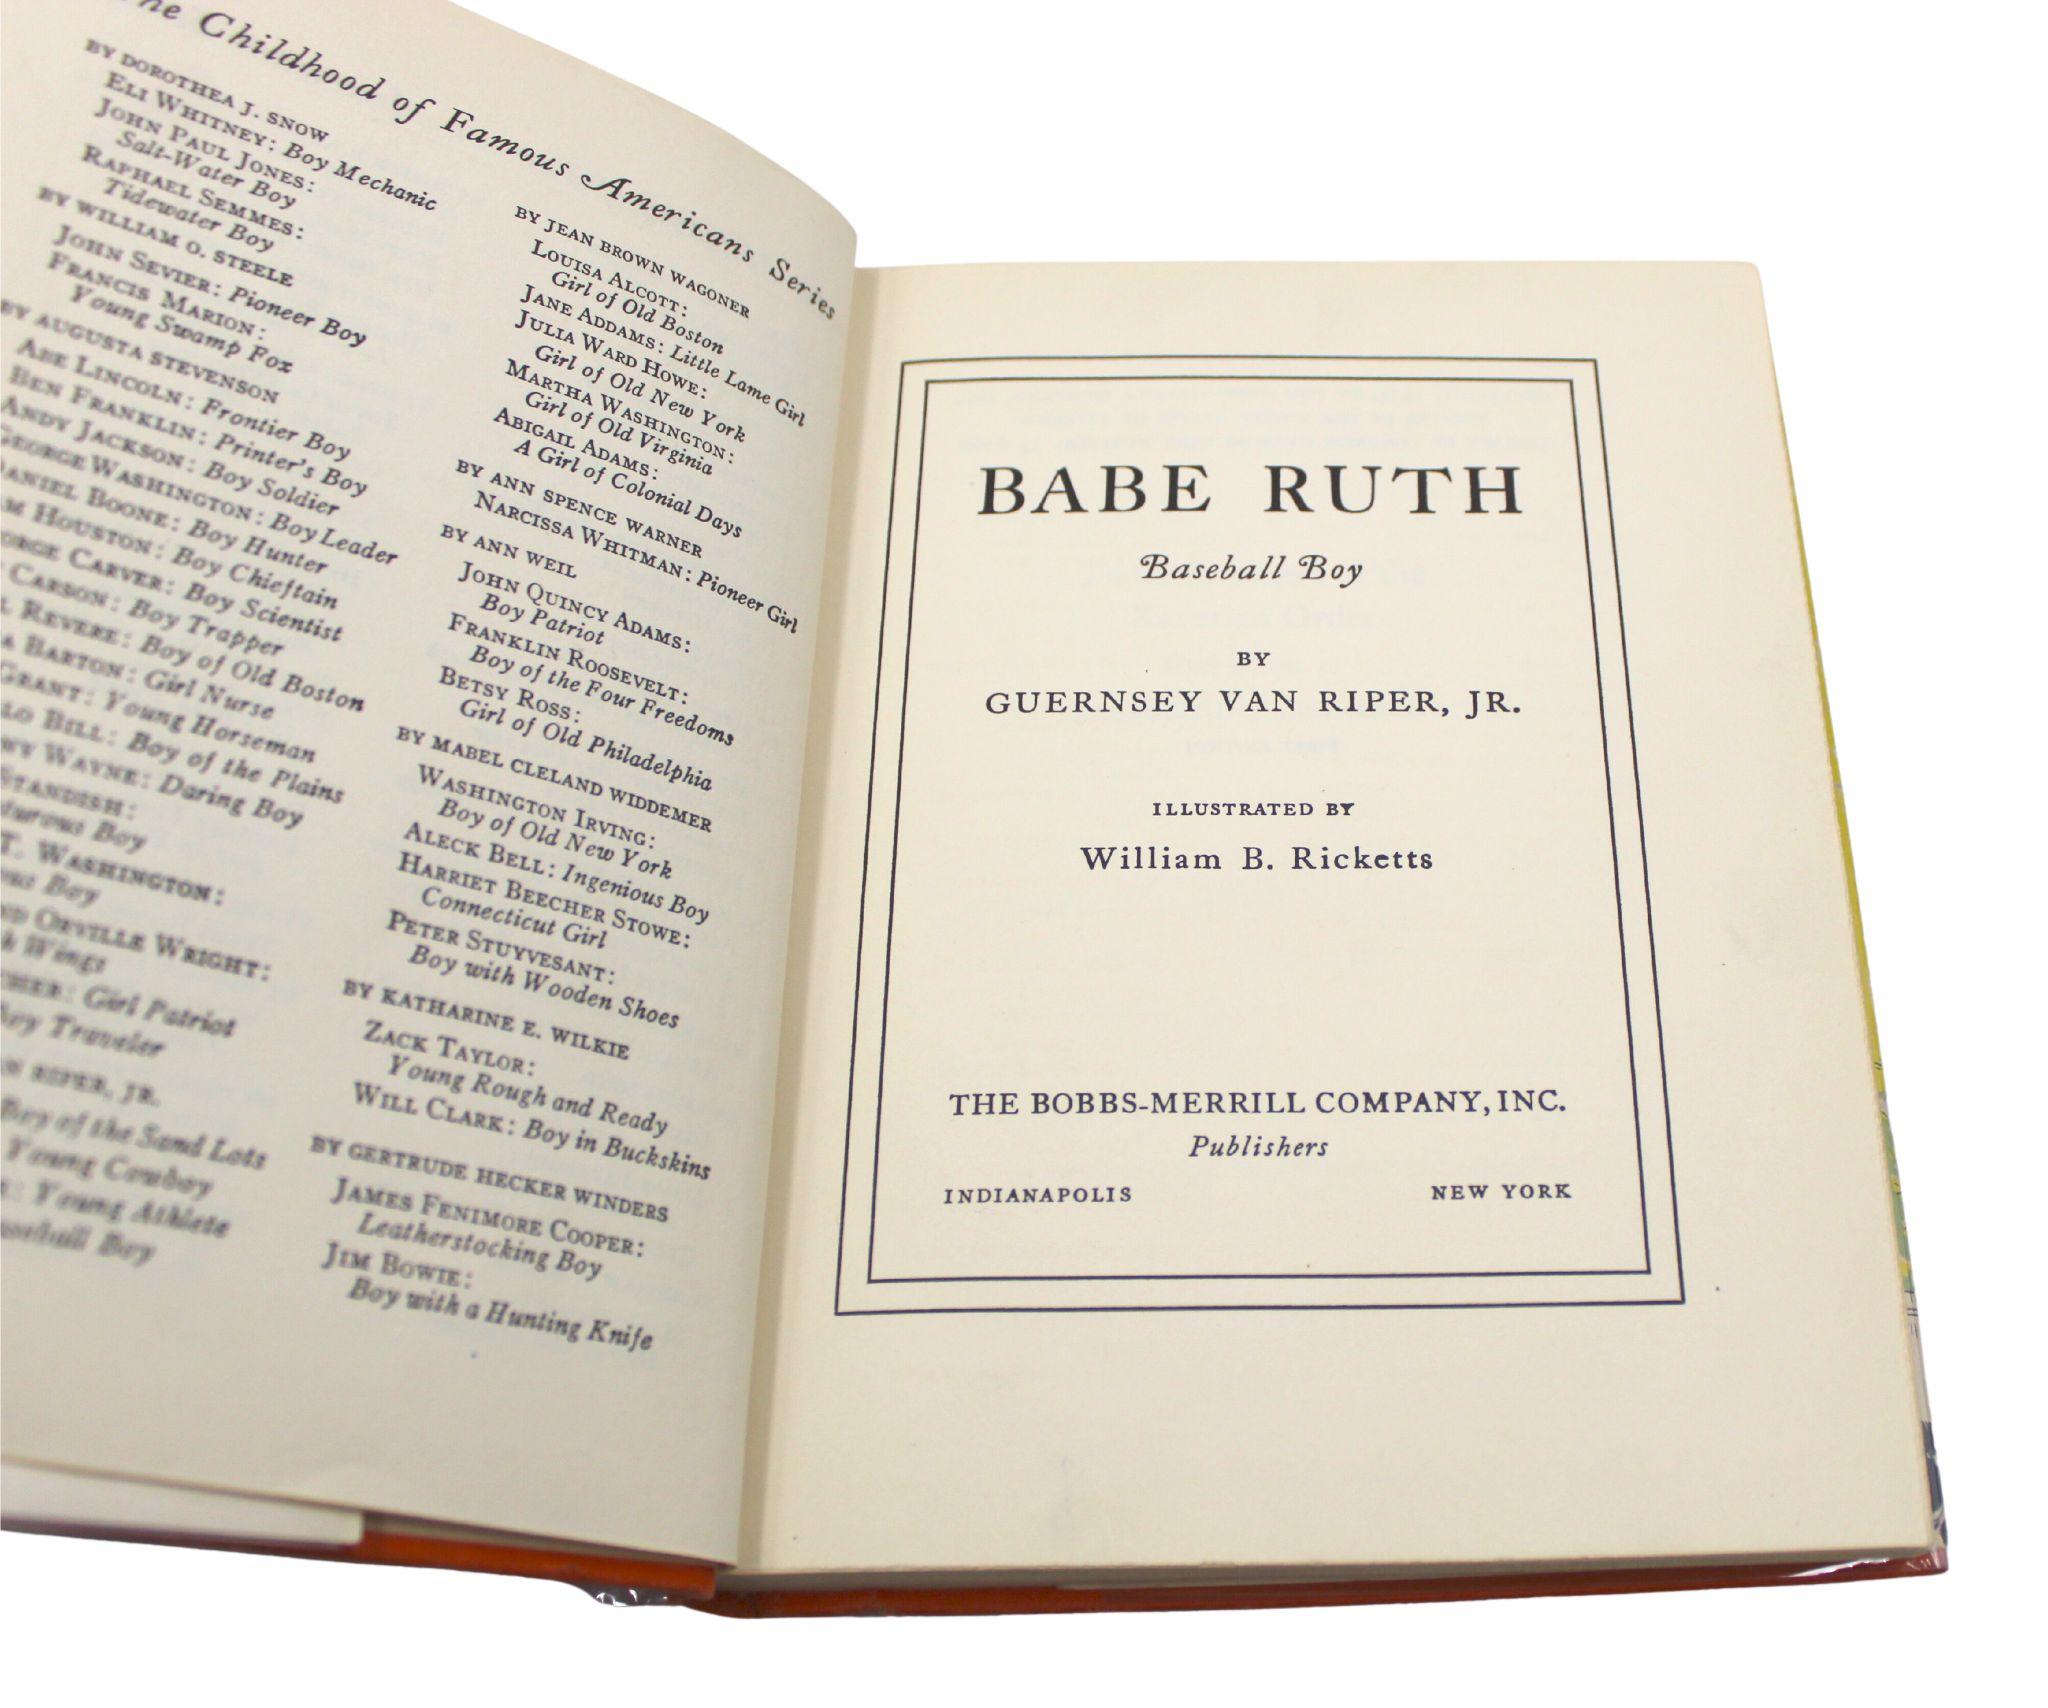 American Babe Ruth, Baseball Boy by Guernsey Van Riper Jr., First Edition, 1954